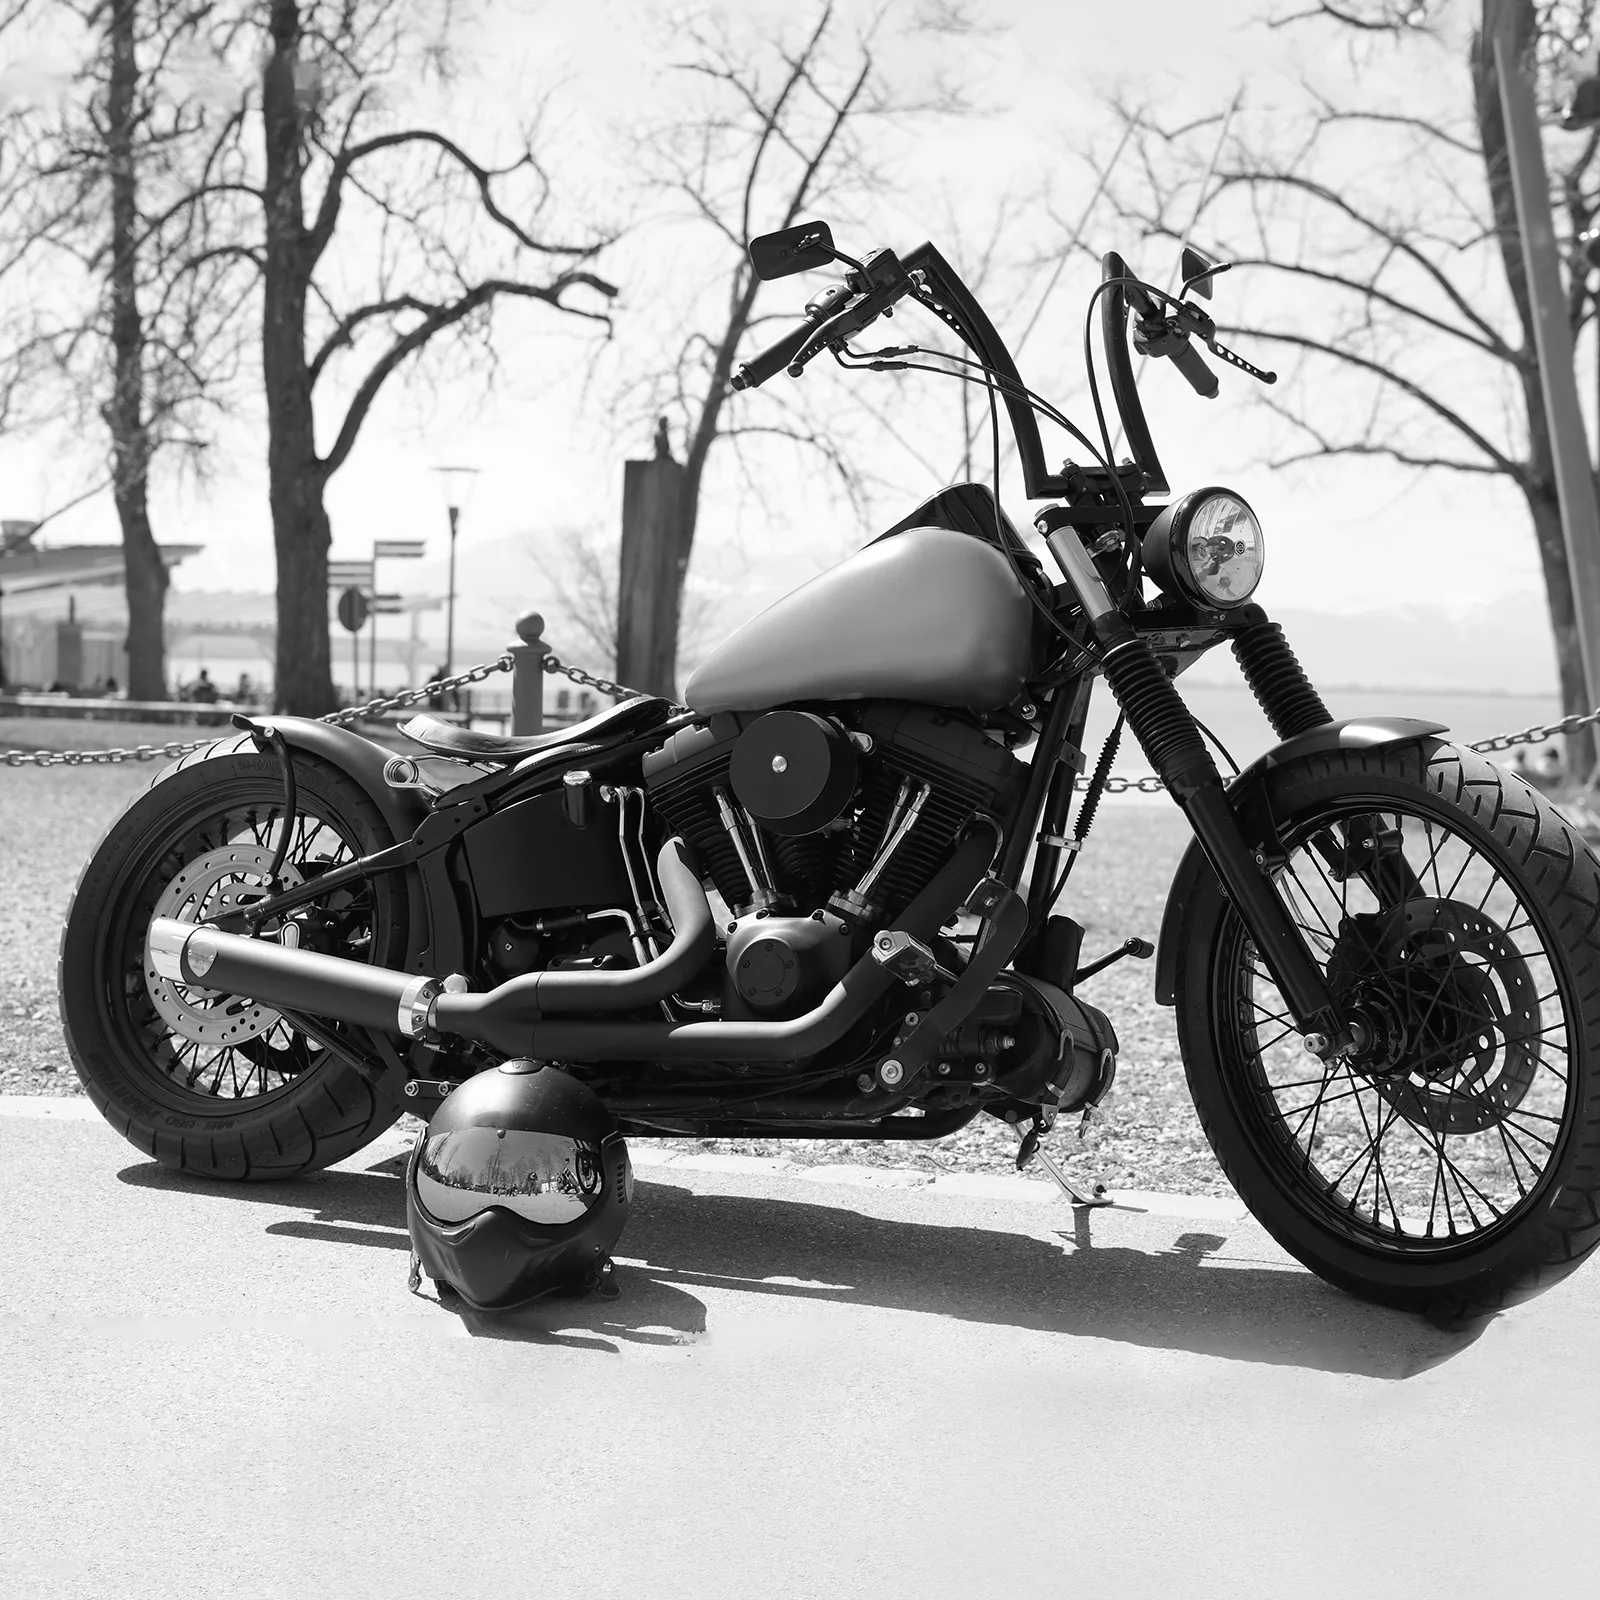 Fer avant pour Harley Sportster Ironhead Bobber 55-78, gaz précieux, 5L, 1.5  gallons - AliExpress